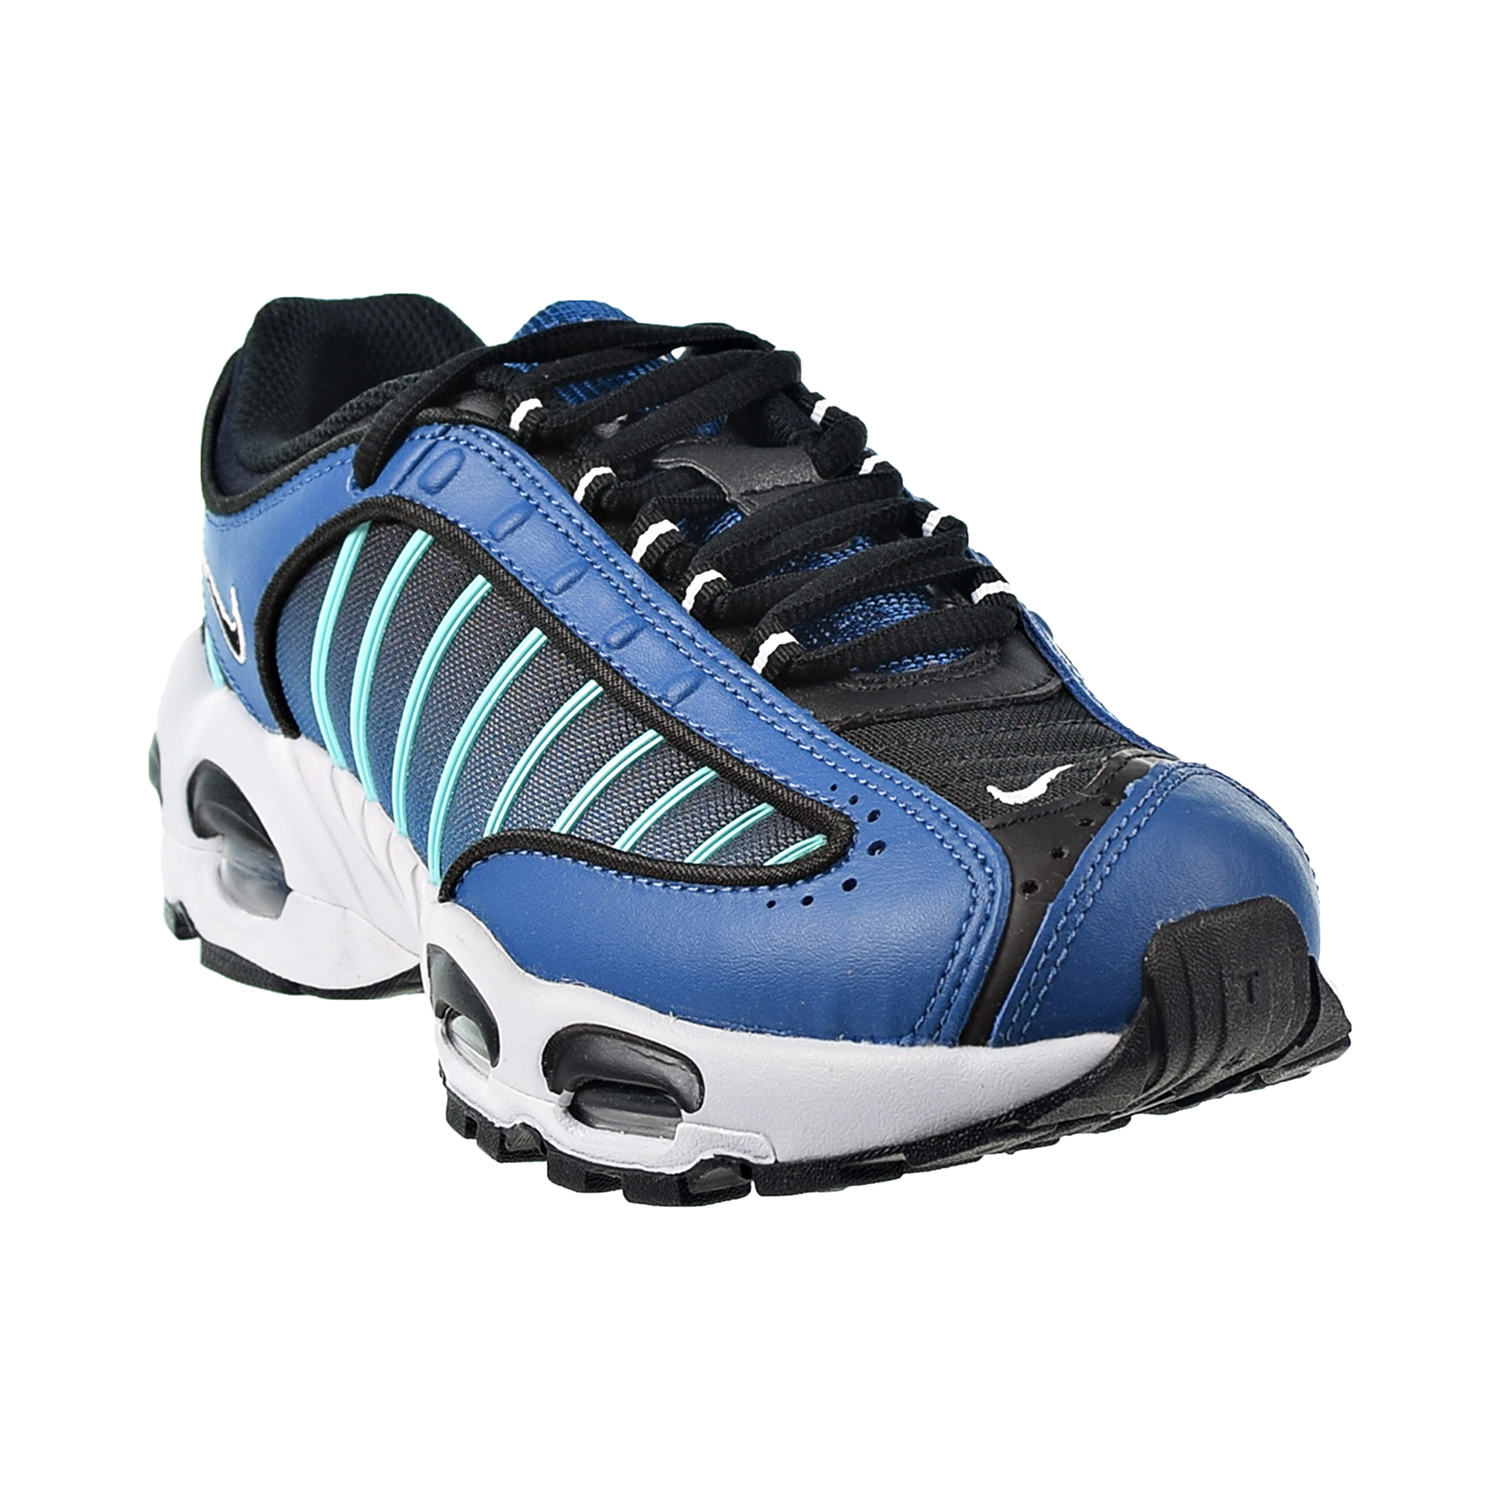 Nike Tailwind IV Big Kids Shoes Industrial Blue-Pure Platinum-White bq9810-400